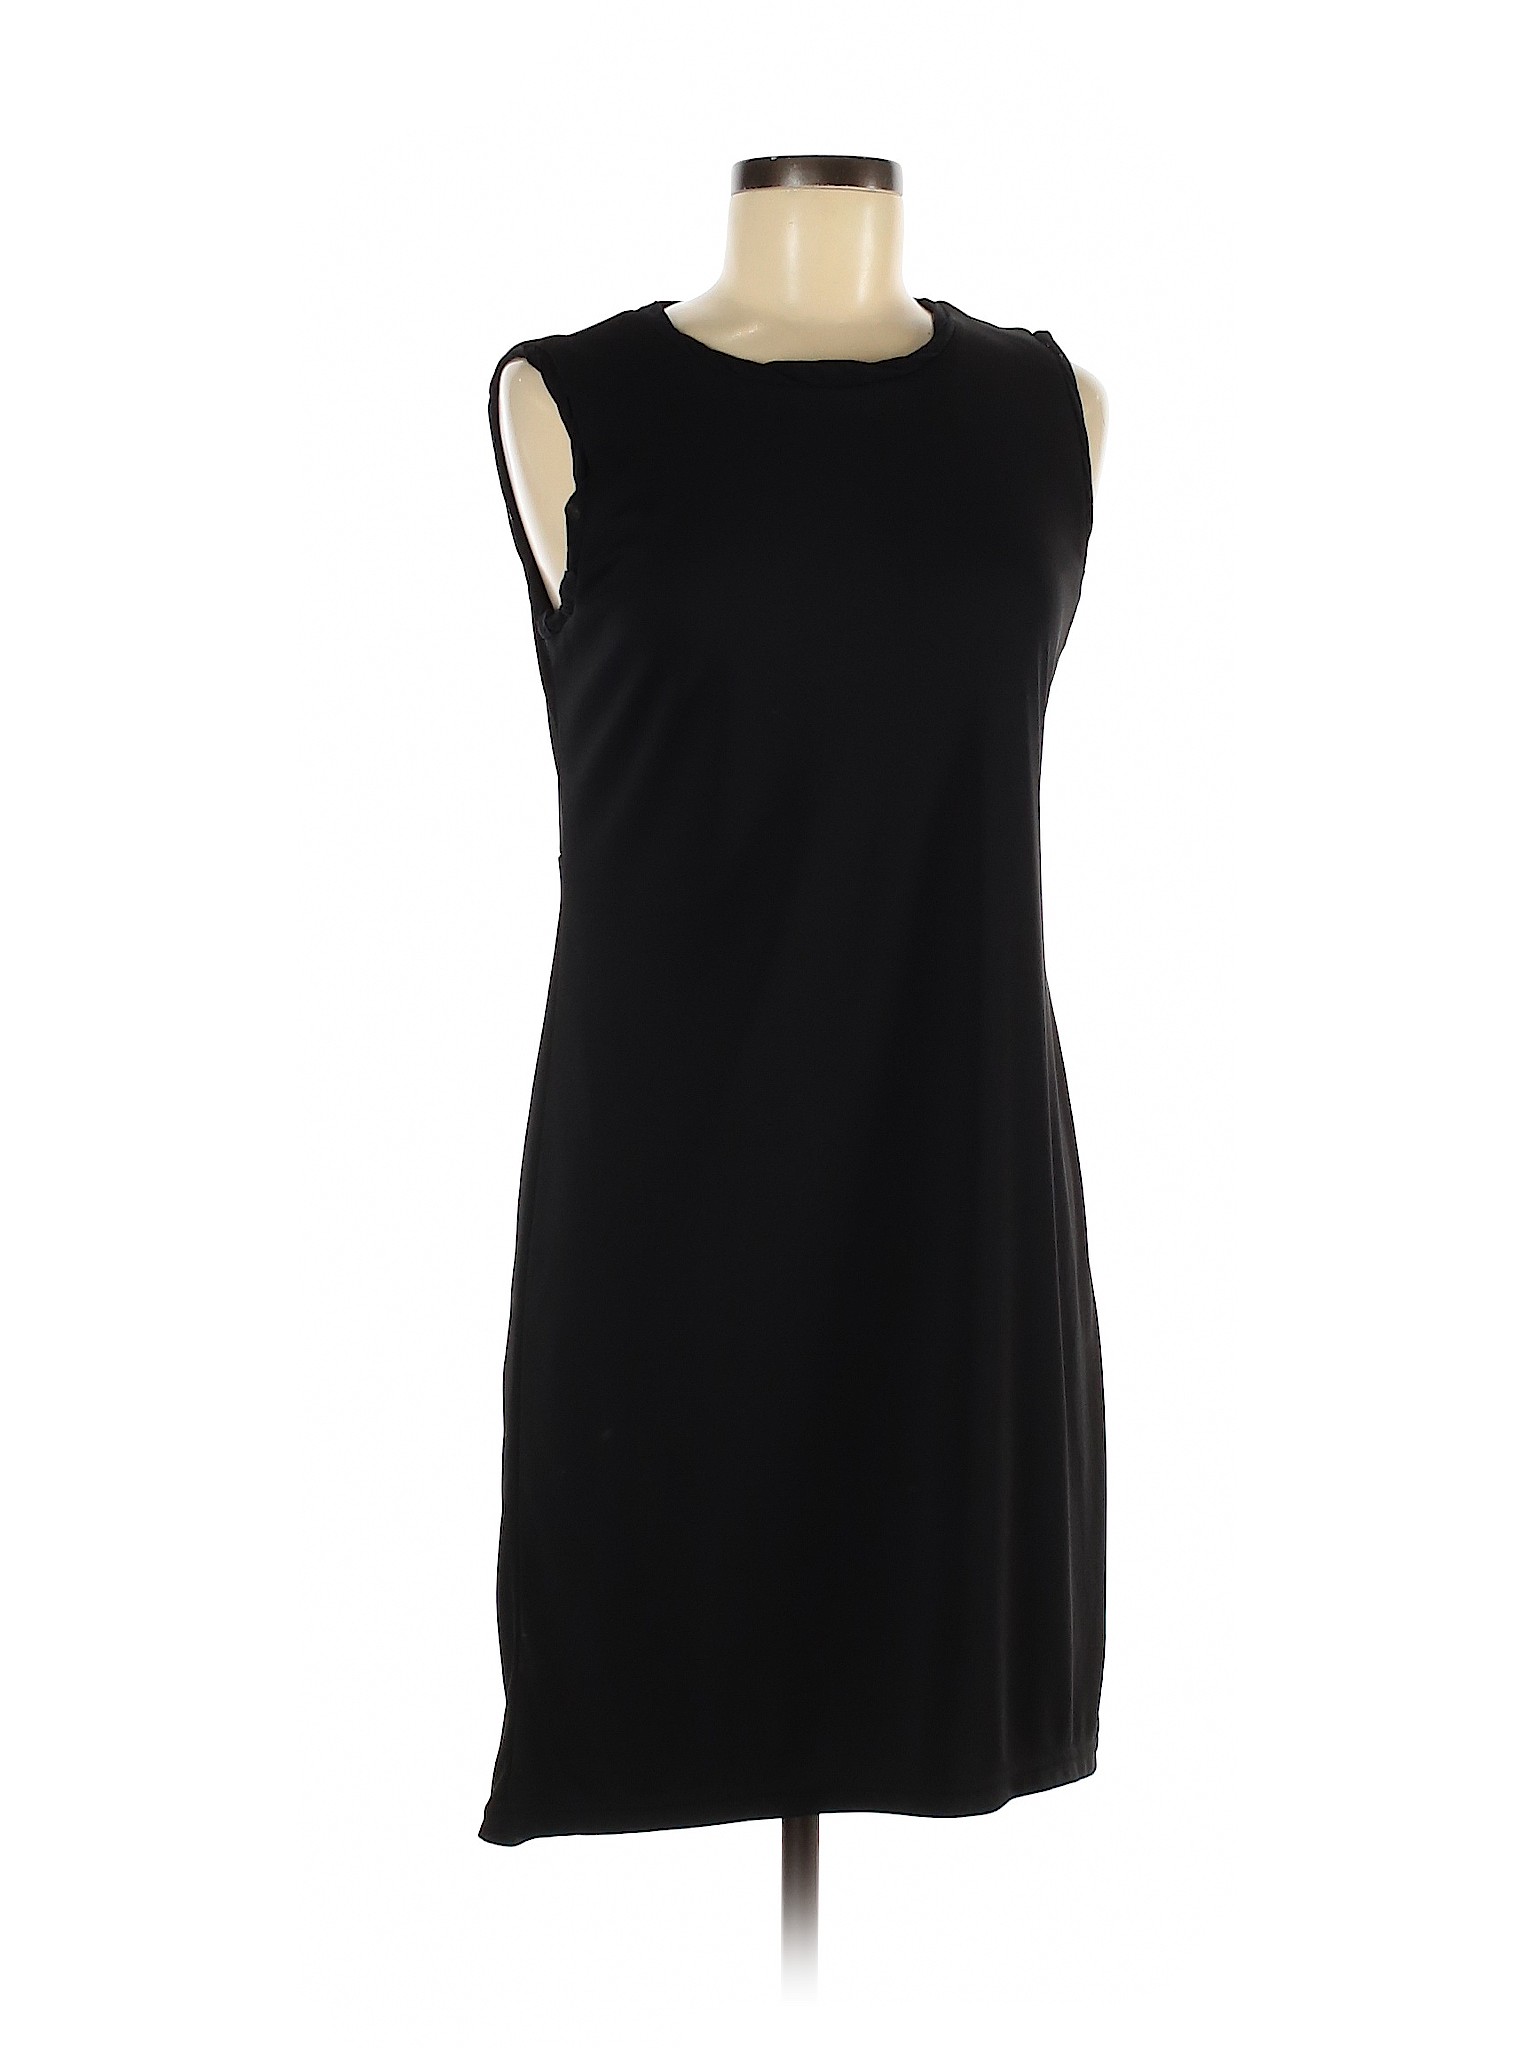 Philosophy Republic Clothing Women Black Casual Dress M | eBay